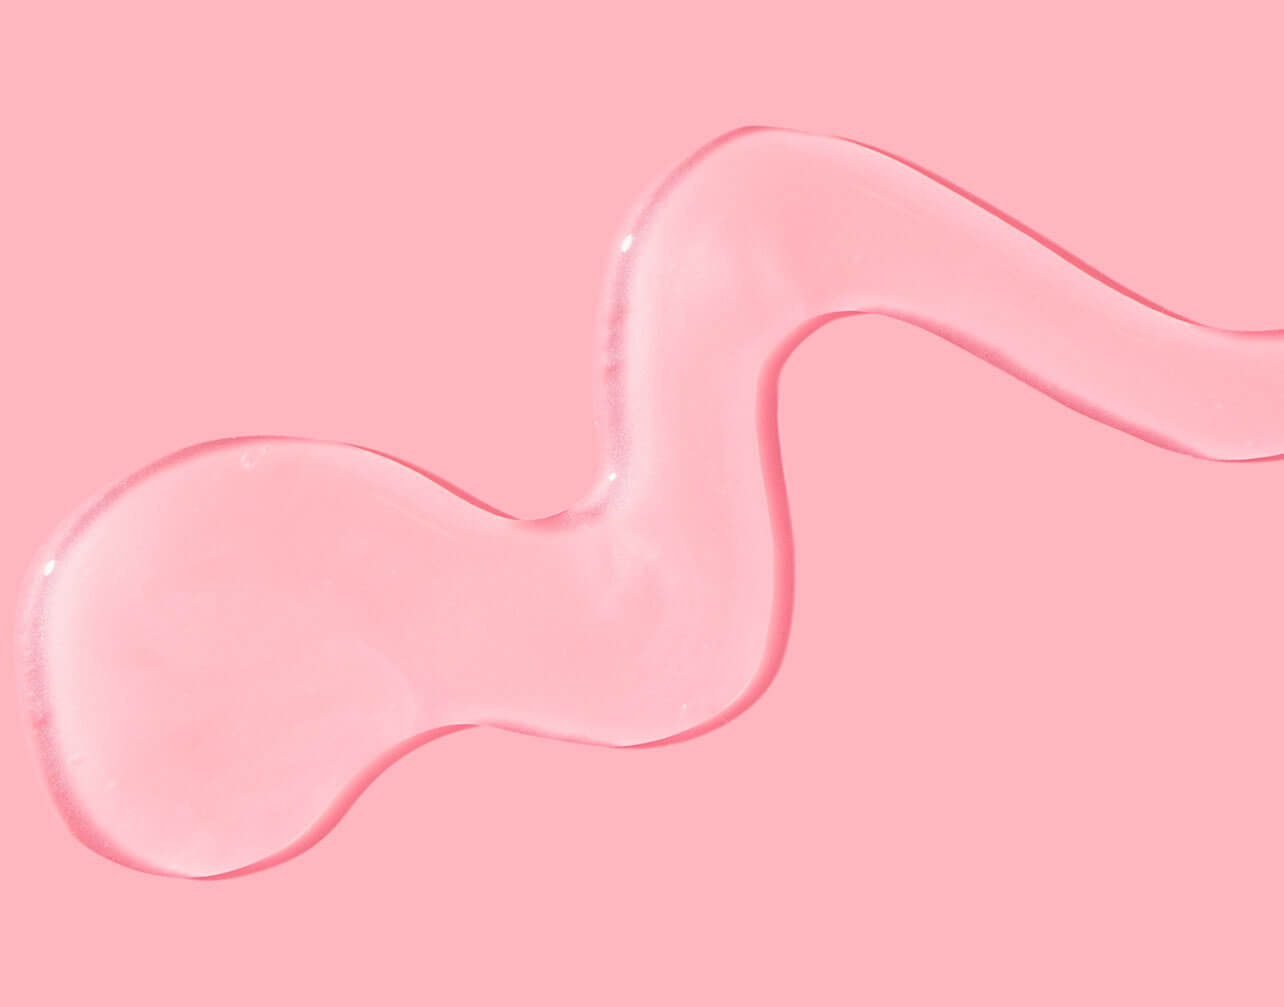 hair gel on pink background